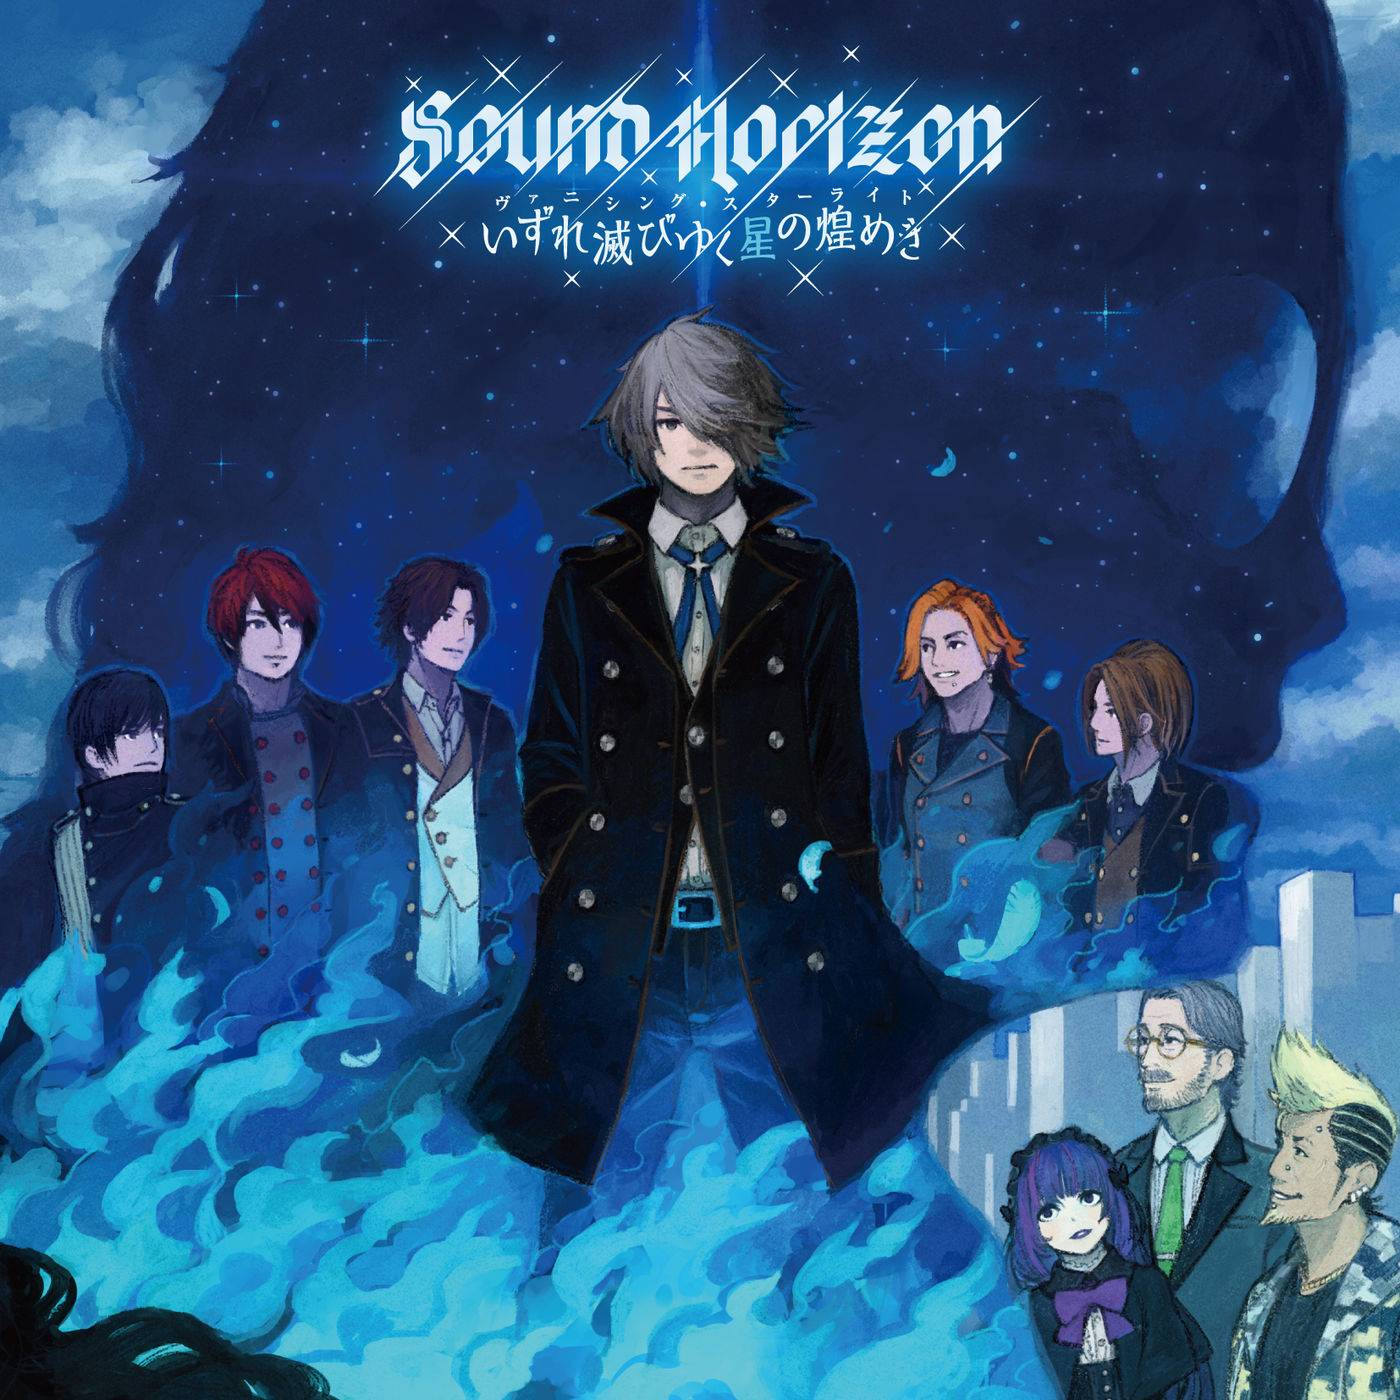 The regular edition cover for Sound Horizon's anniversary maxi Vanishing Starlight.